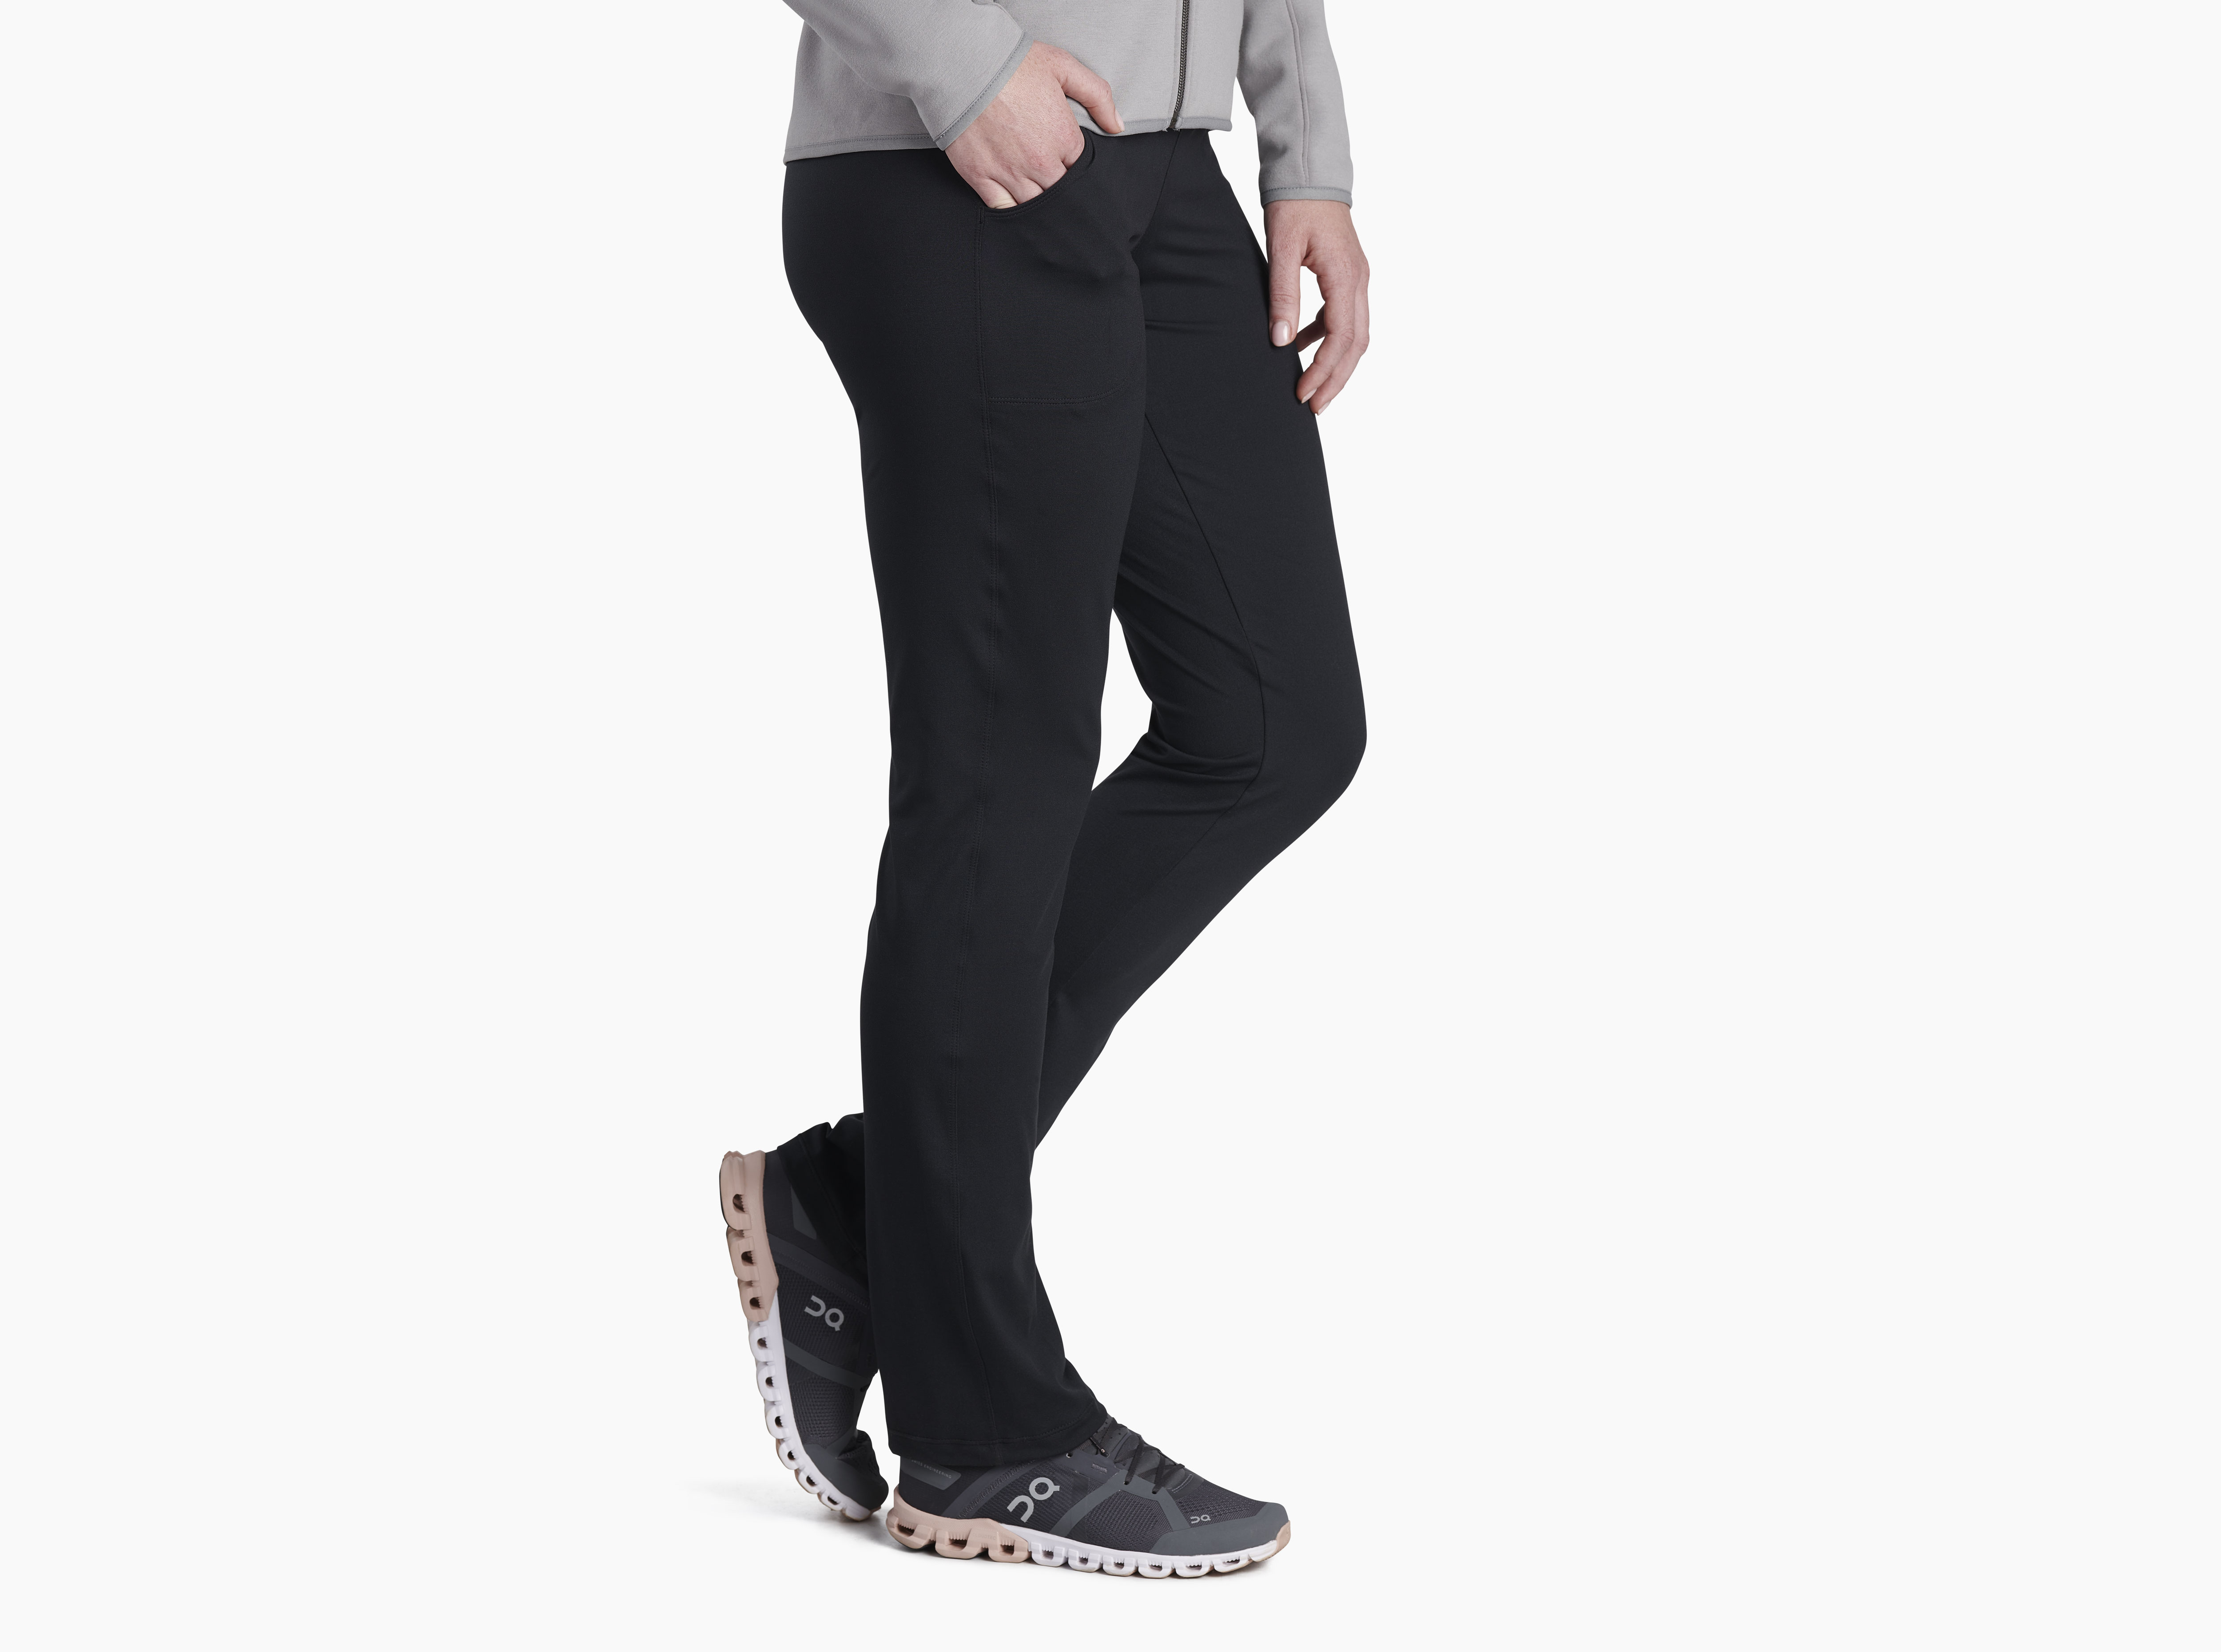 Kuhl Strattus Pants Style 6234 Women's Size 0 Black Hiking Travel Casual